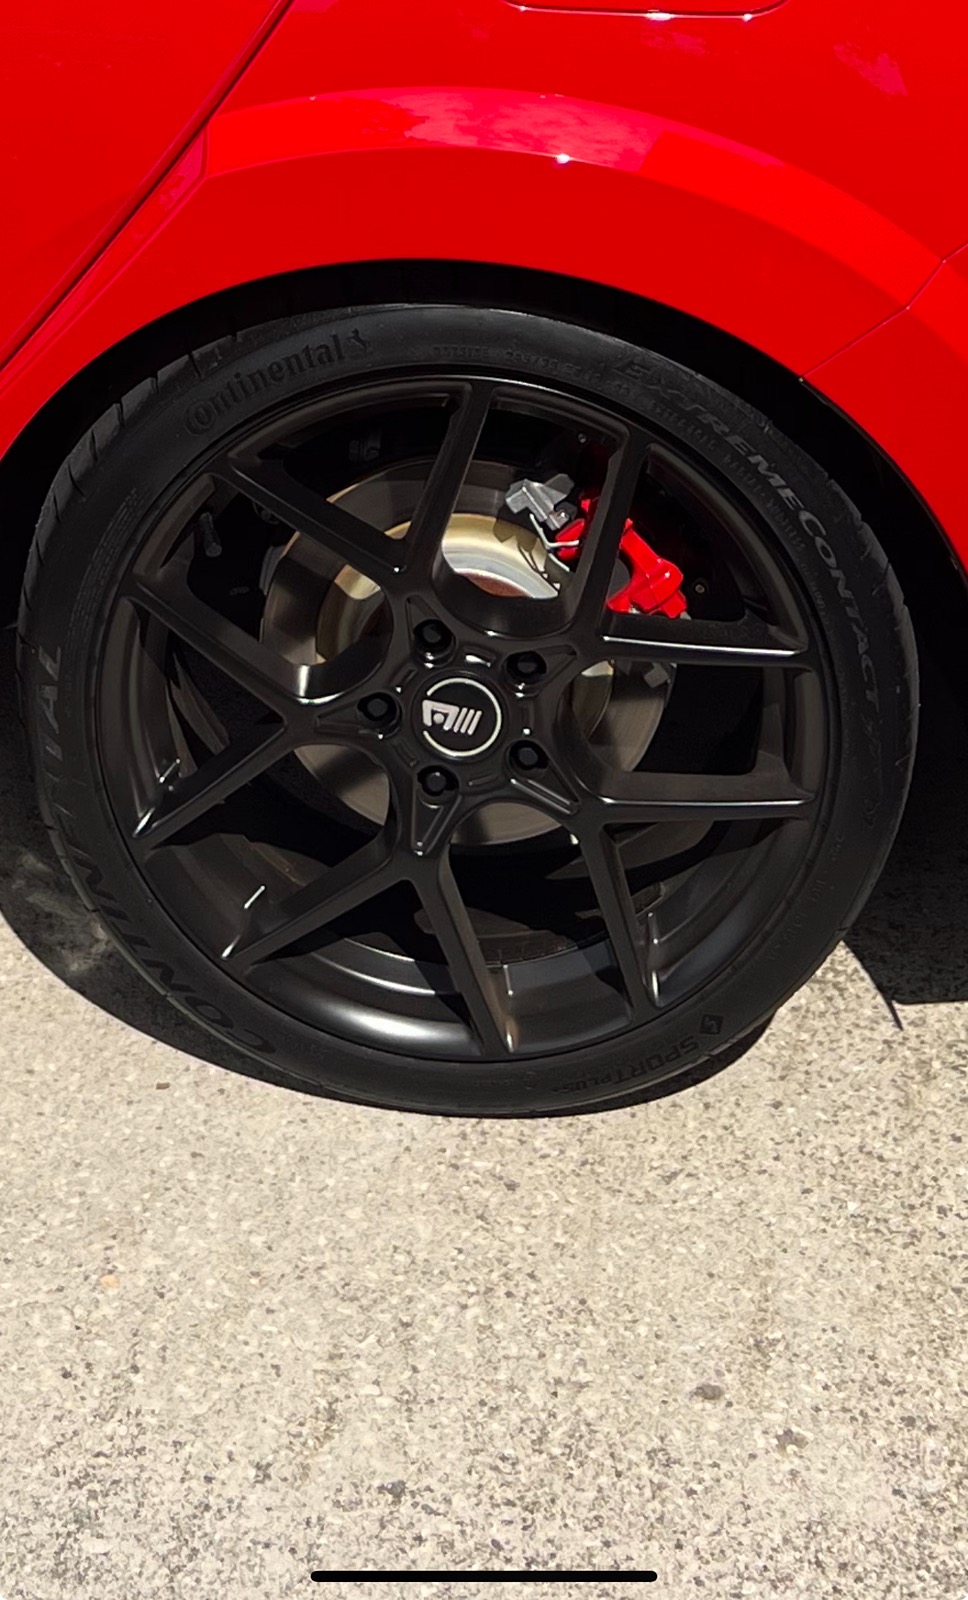 Honda Civic 10th gen MR924 Motegi Black Rims with 245/35 Extreme Contact Tires IMG_0796